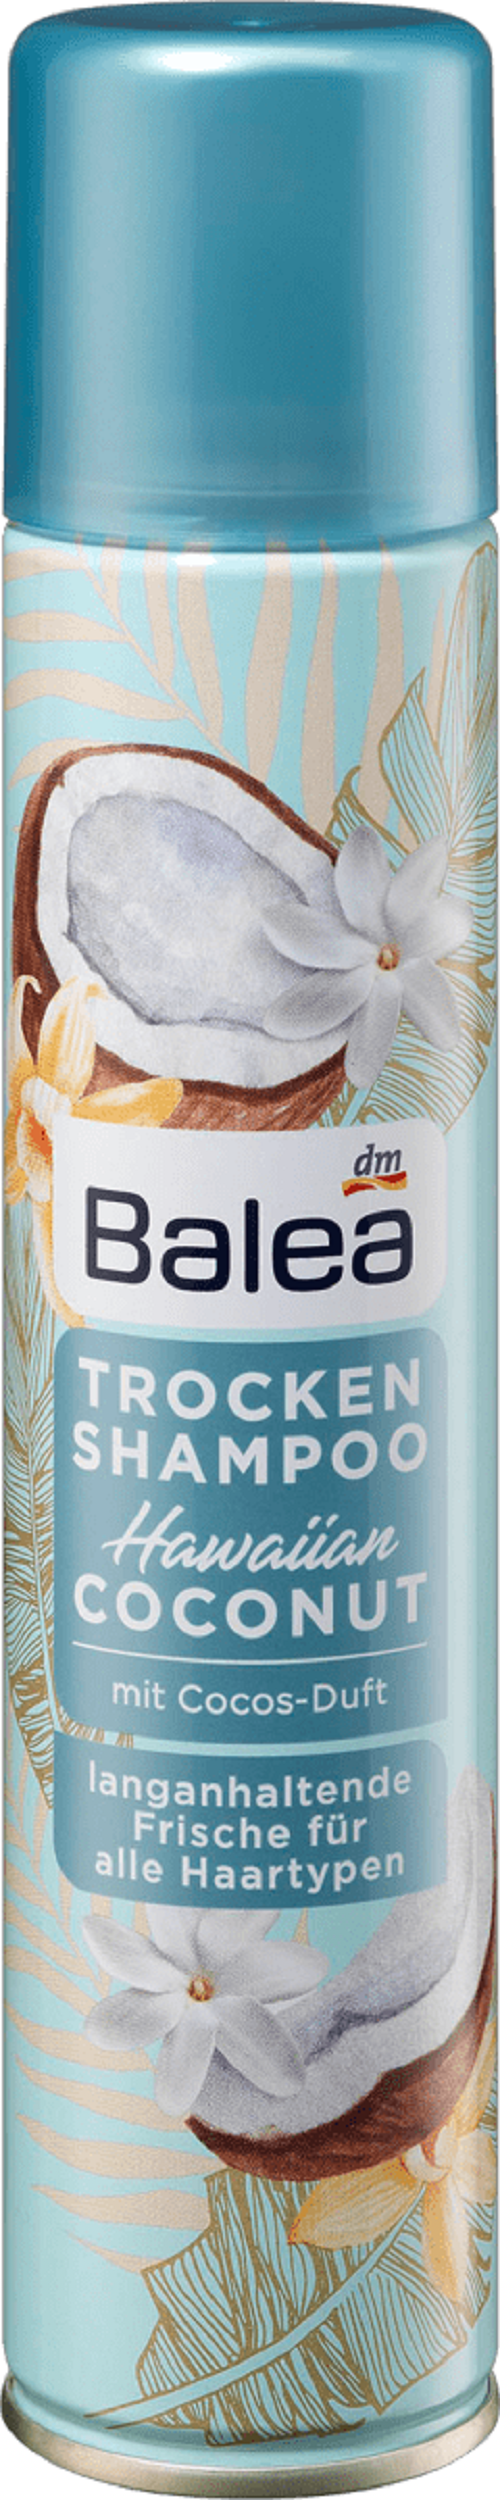 balea pfirsich i cocos szampon zel opinie